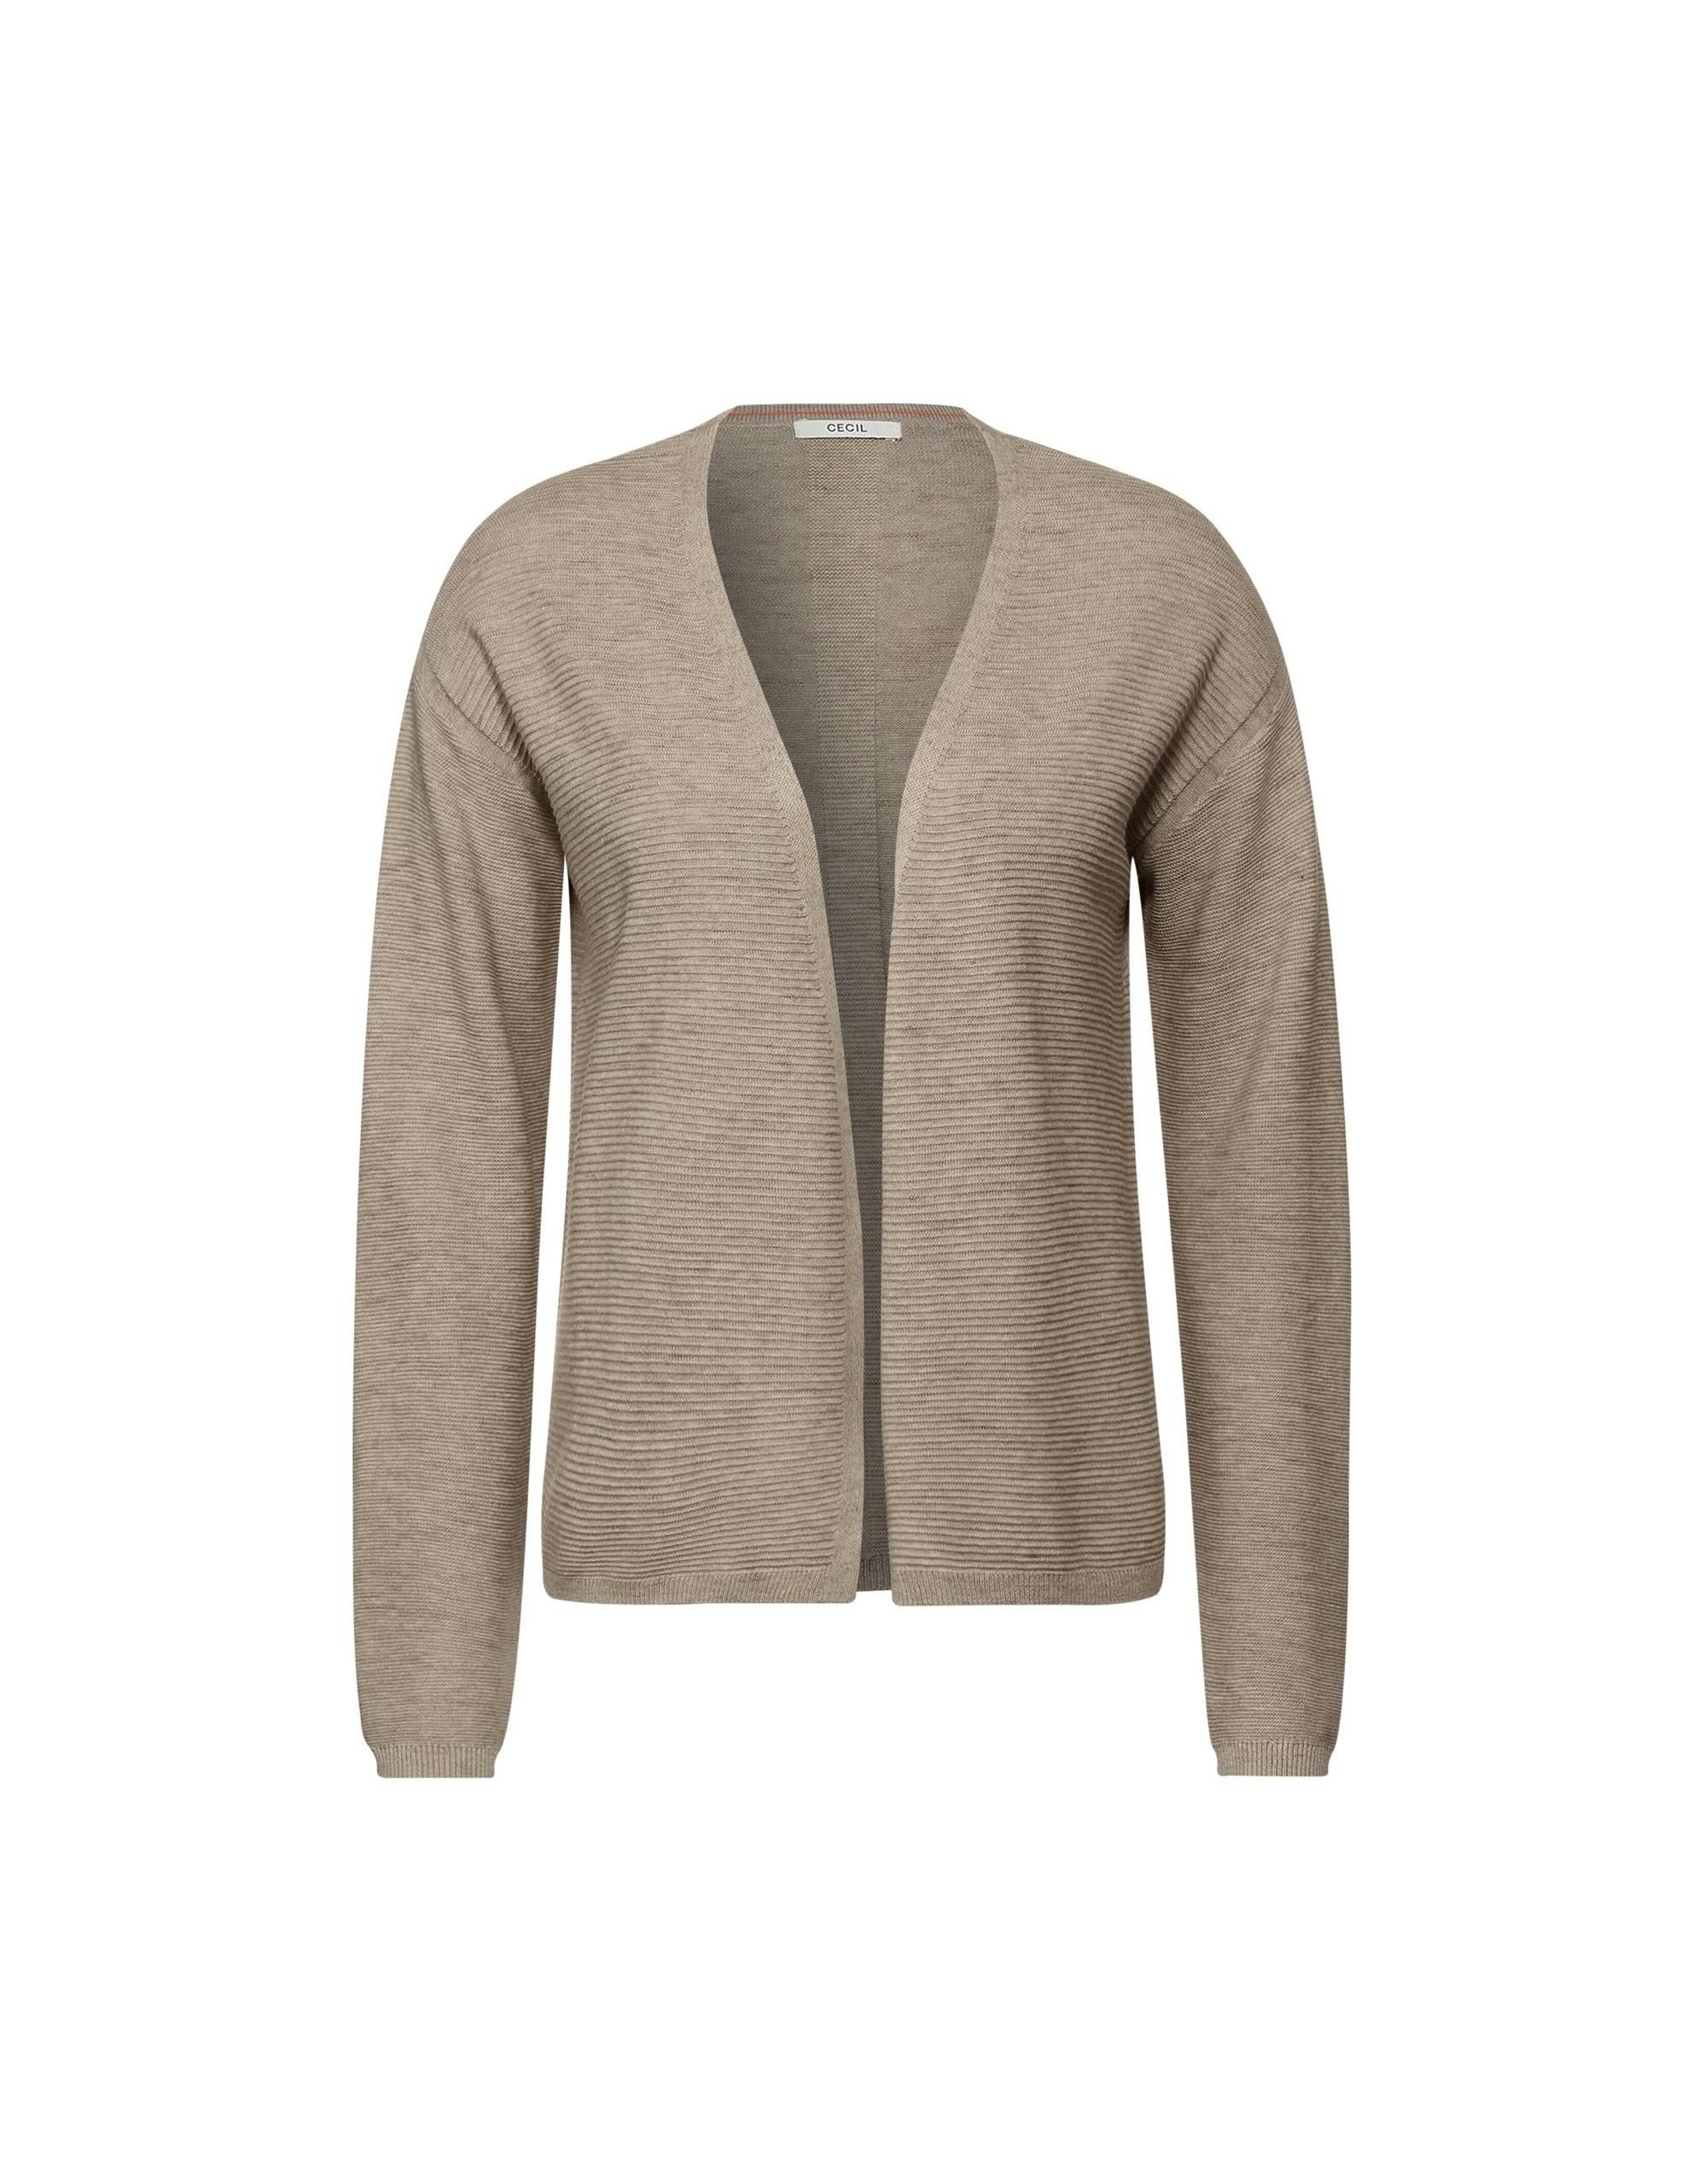 Rabatt 93 % HERREN Pullovers & Sweatshirts NO STYLE Mango Strickjacke Grau M 